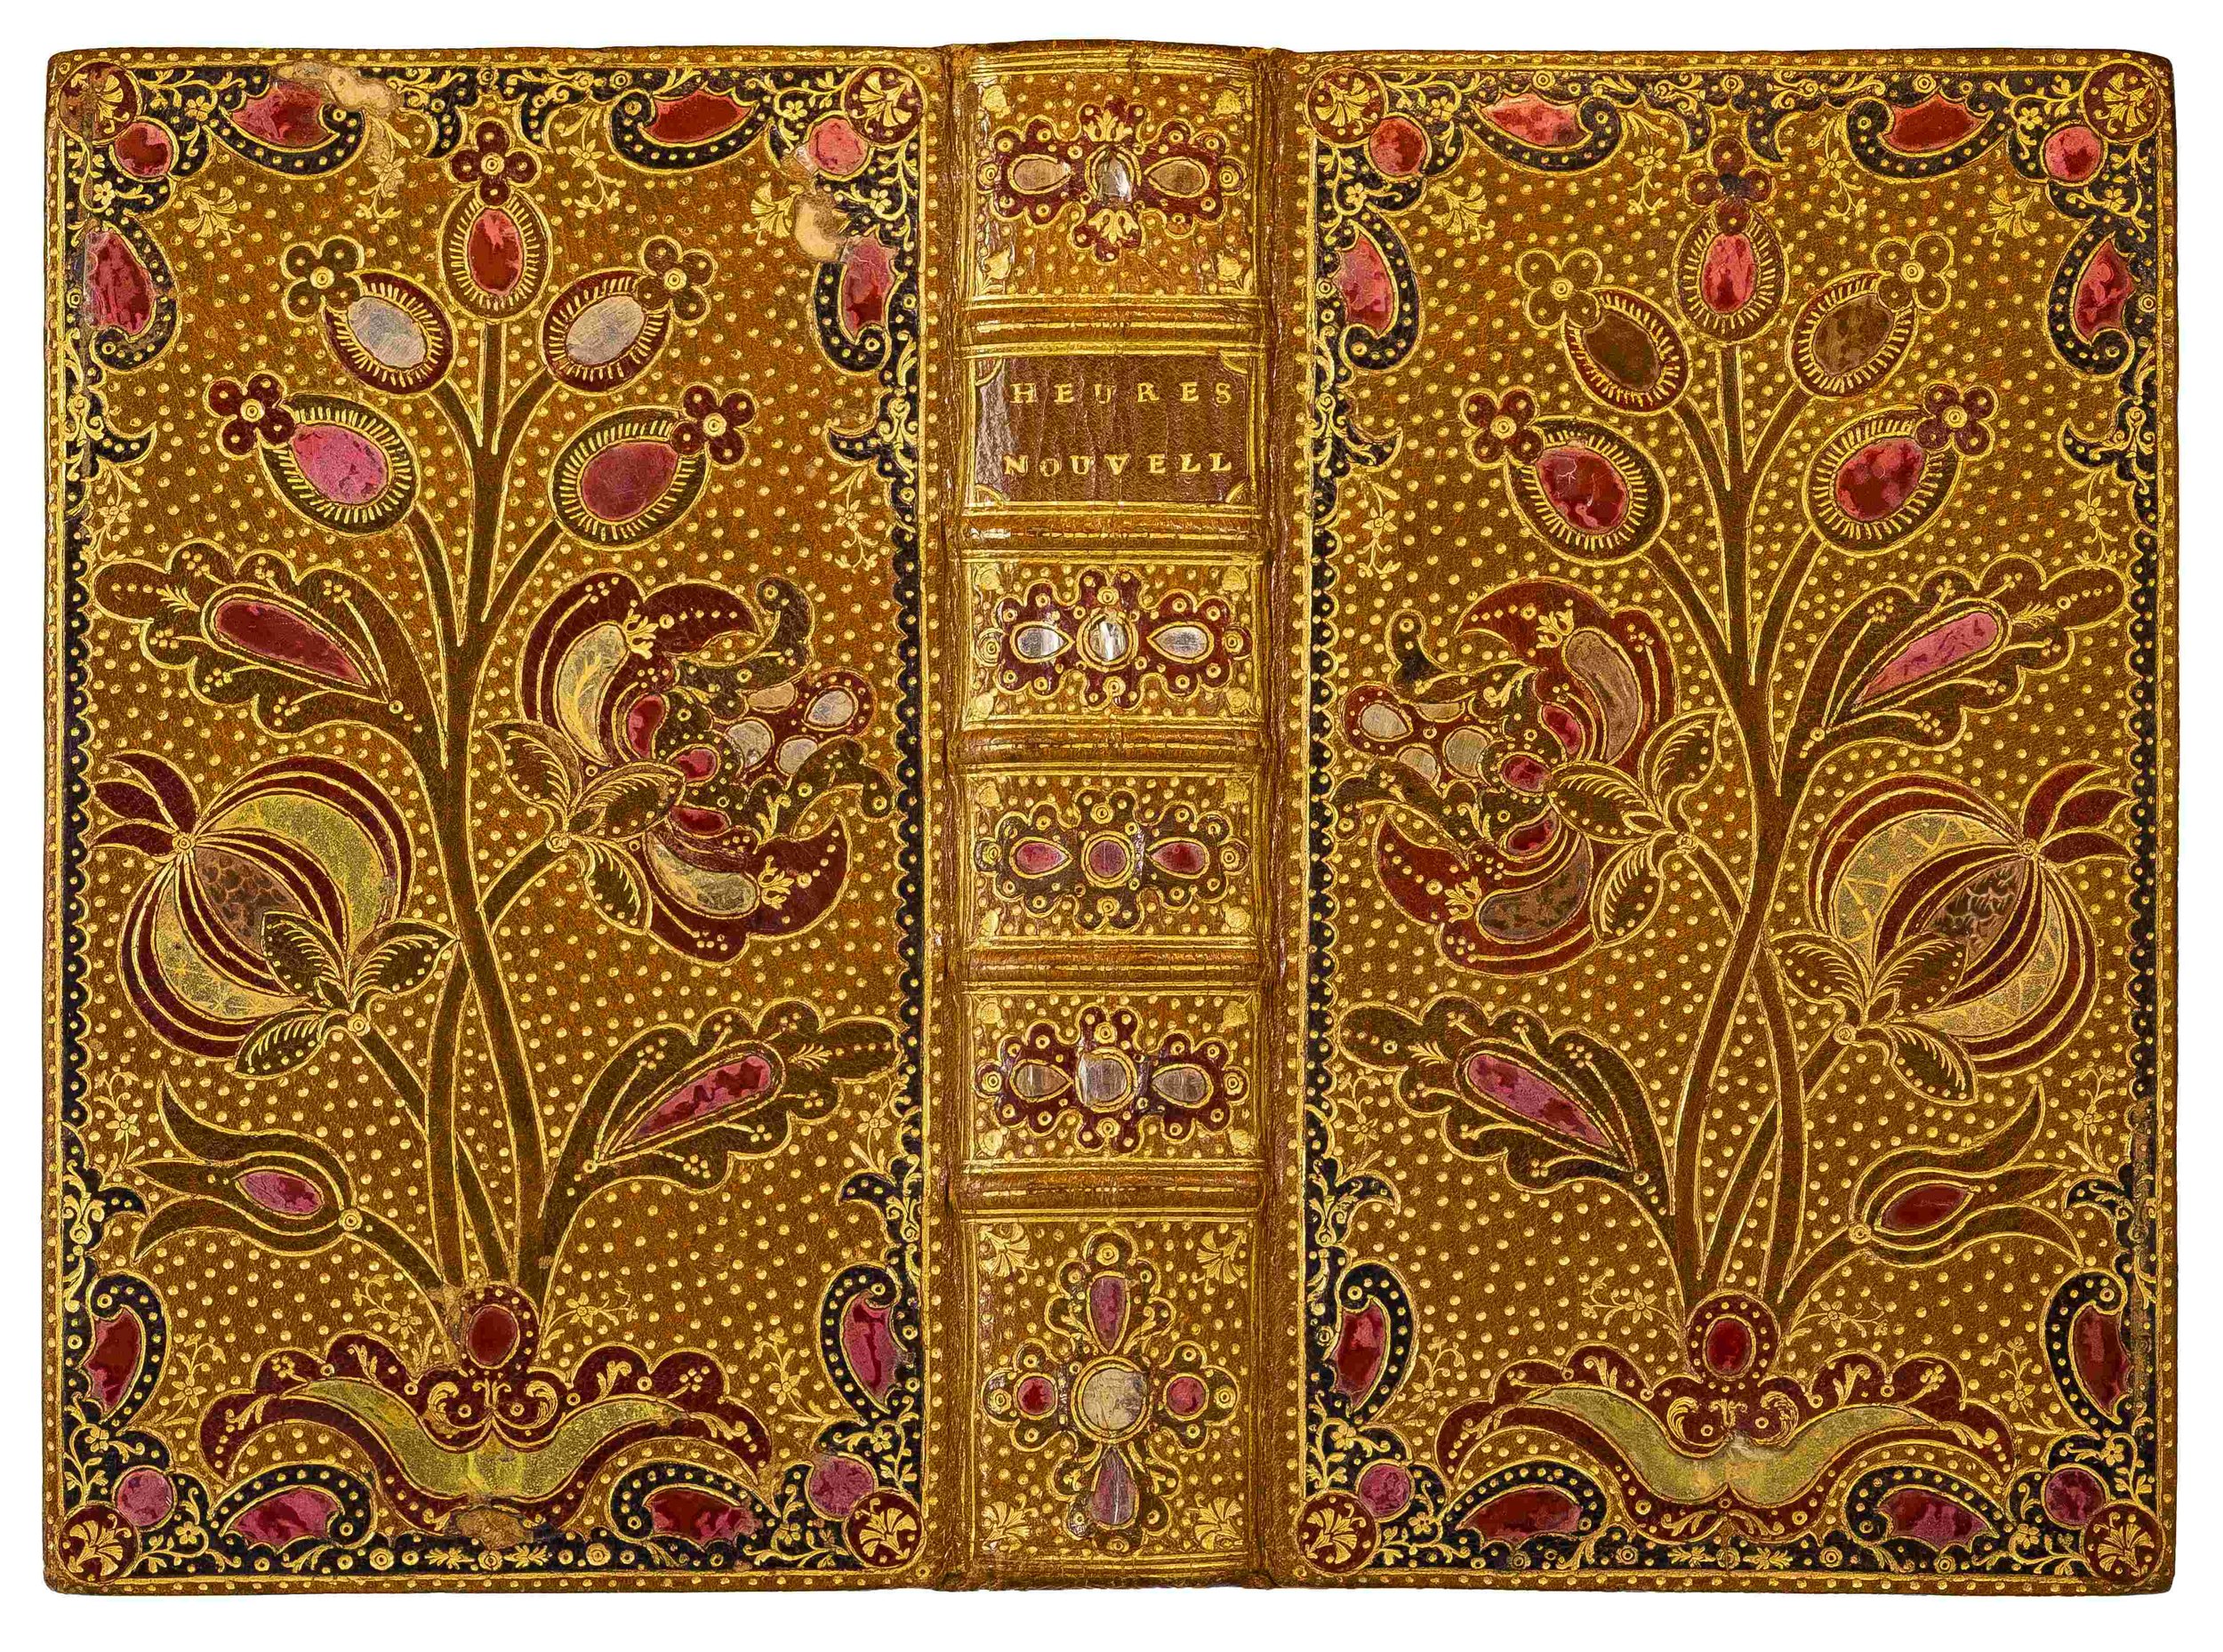 079-derome-mica-Inlaid-Binding-morocco-mosaic-reliure-maroquin-18th-century.jpg